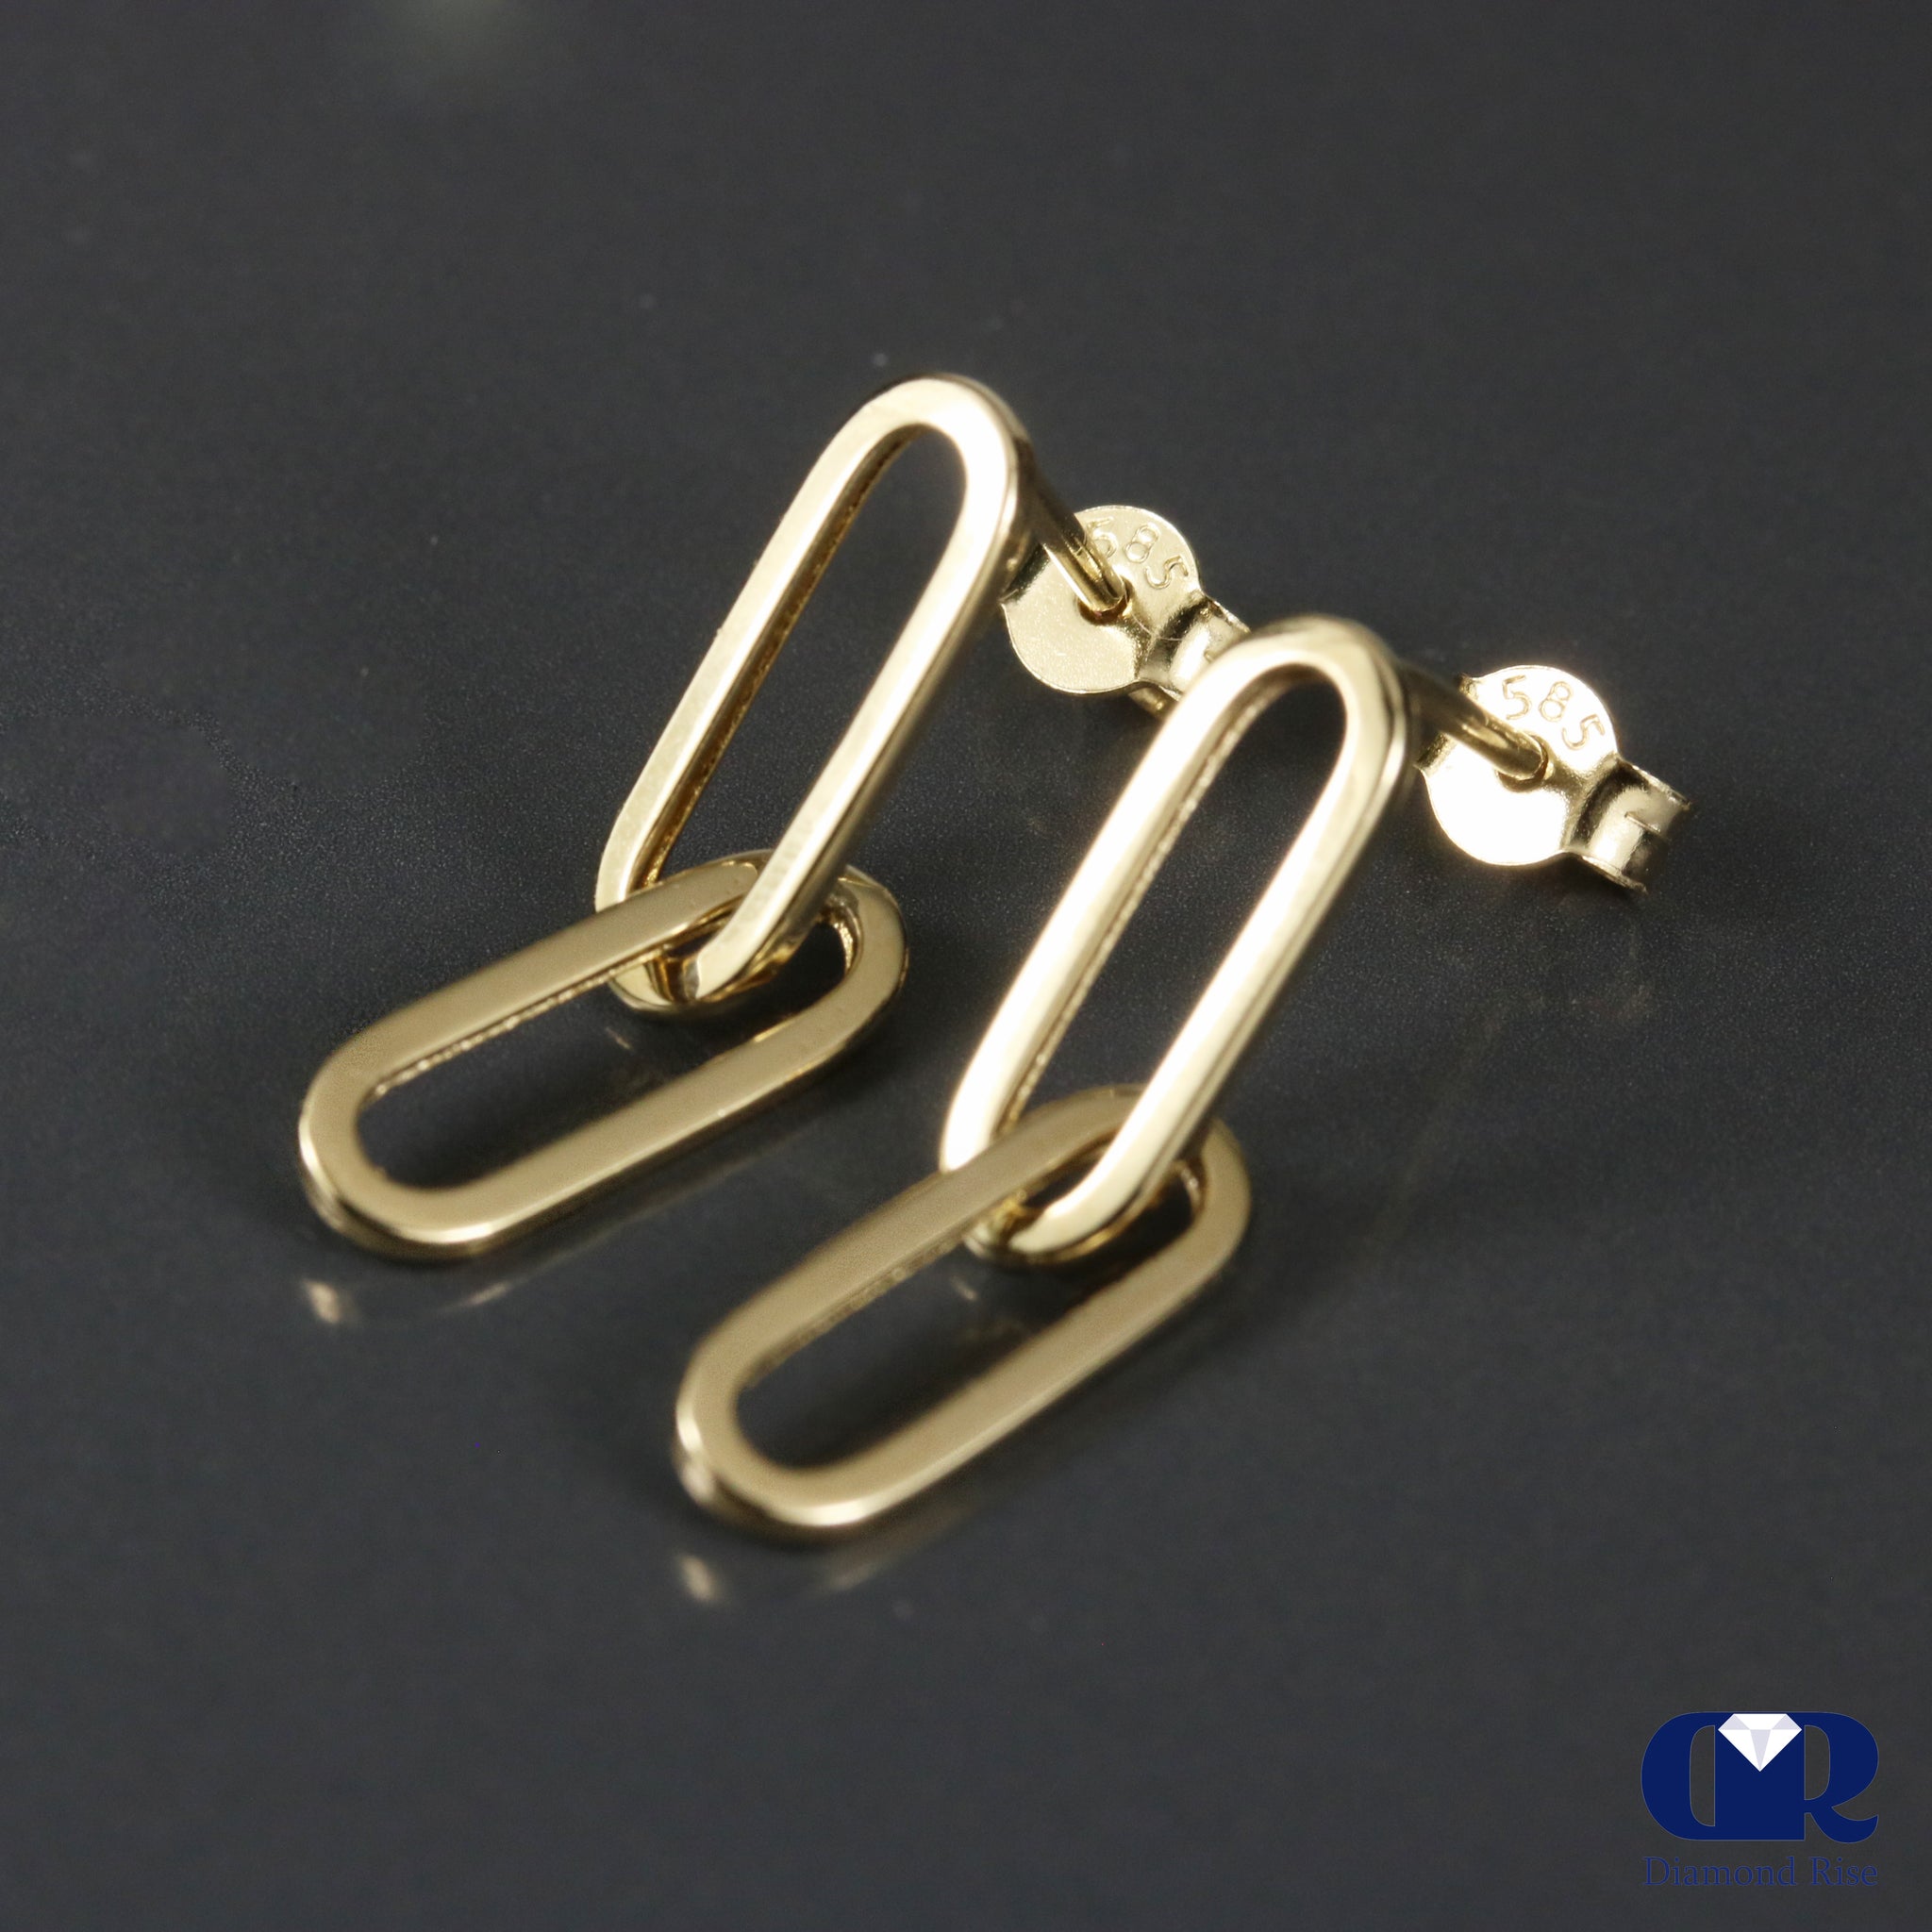 Natural Diamond Safety Pin Earrings 14K Yellow Gold Diamond 